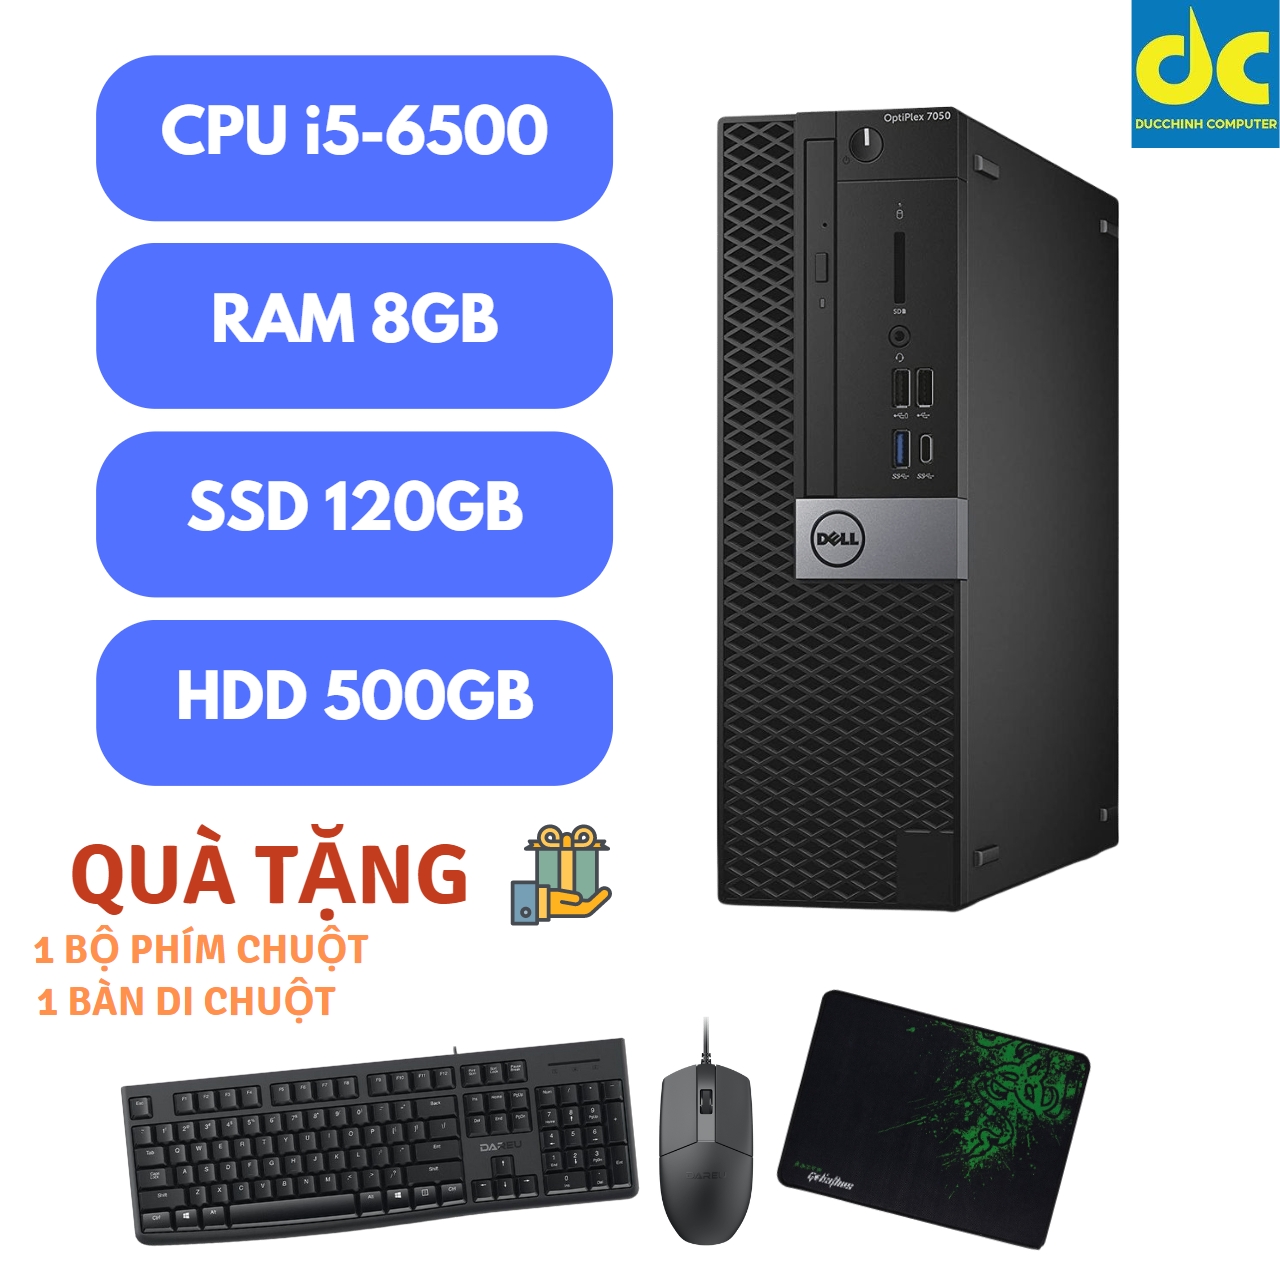 Máy Tính Dell Optiplex 7050, Chip i5-6500, Ram 8GB, SSD 120GB, HDD 500GB, DVD